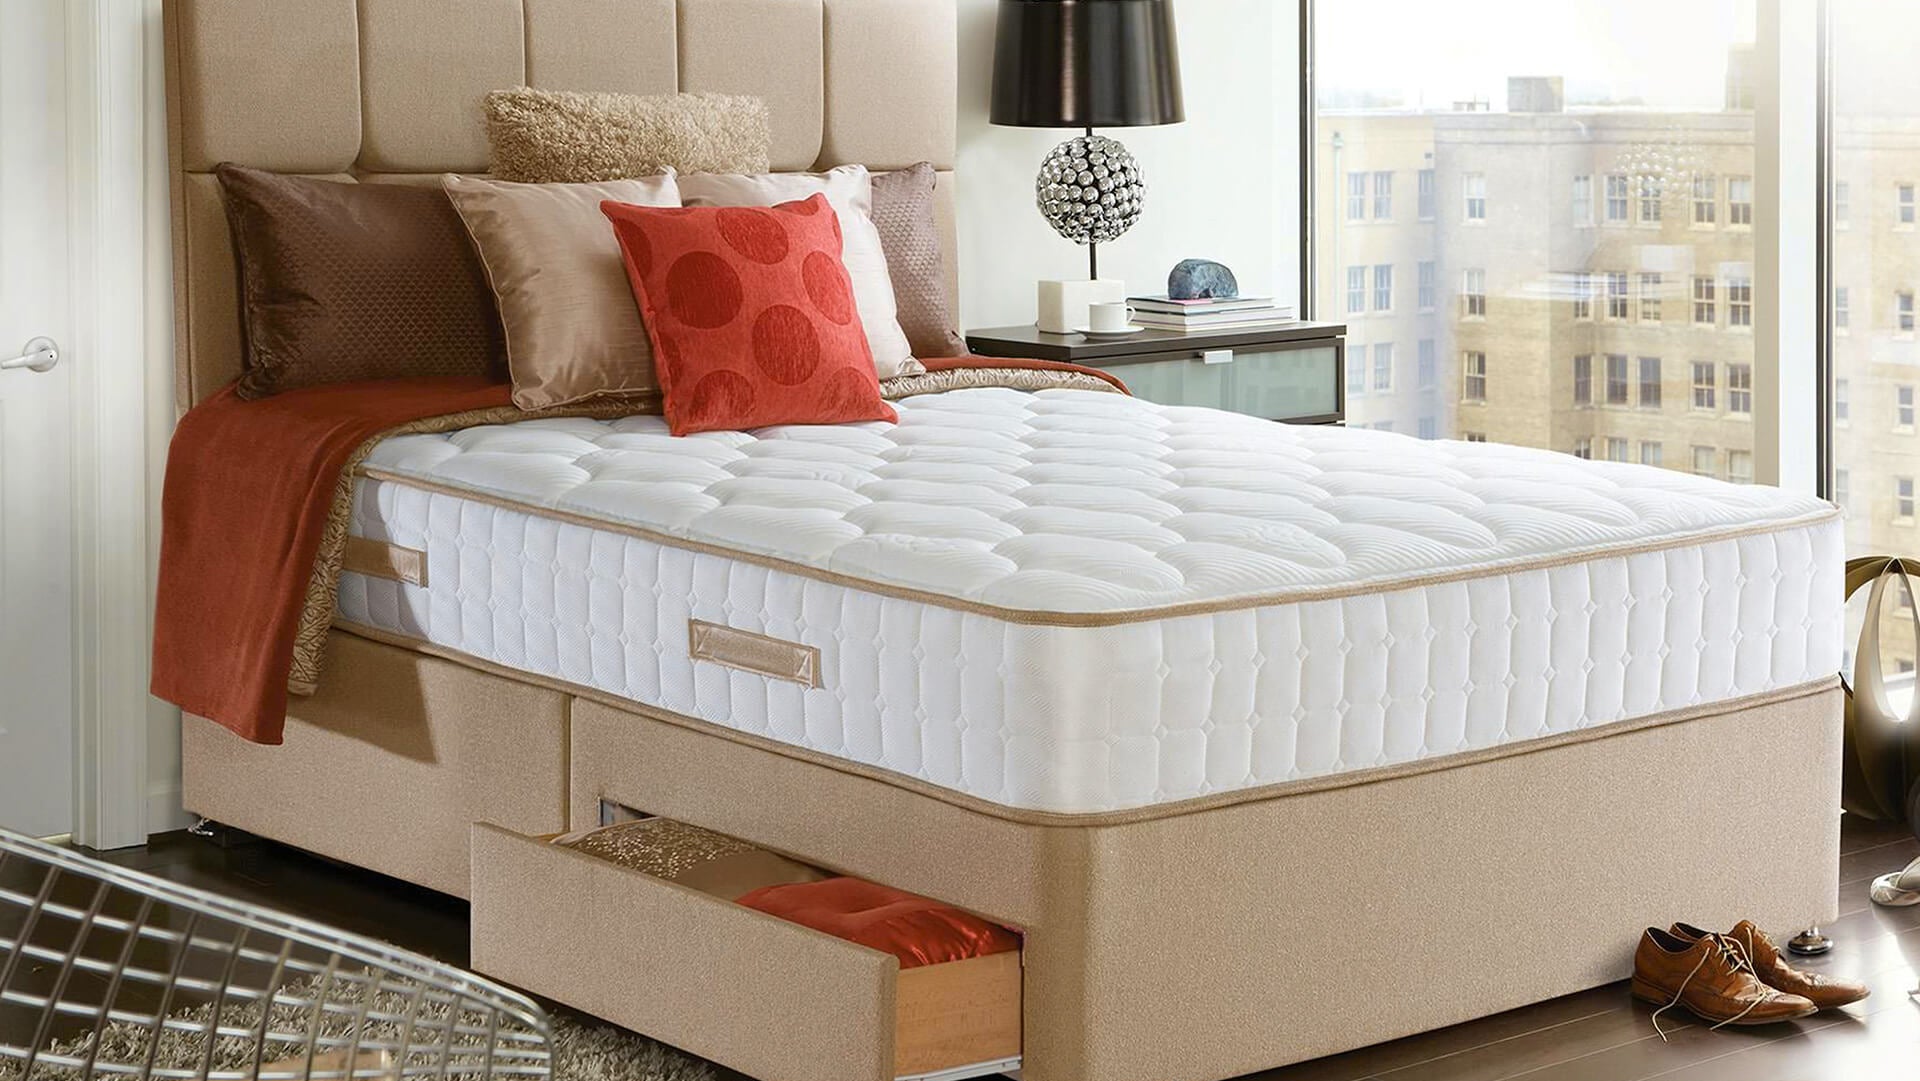 Modern interior mattress